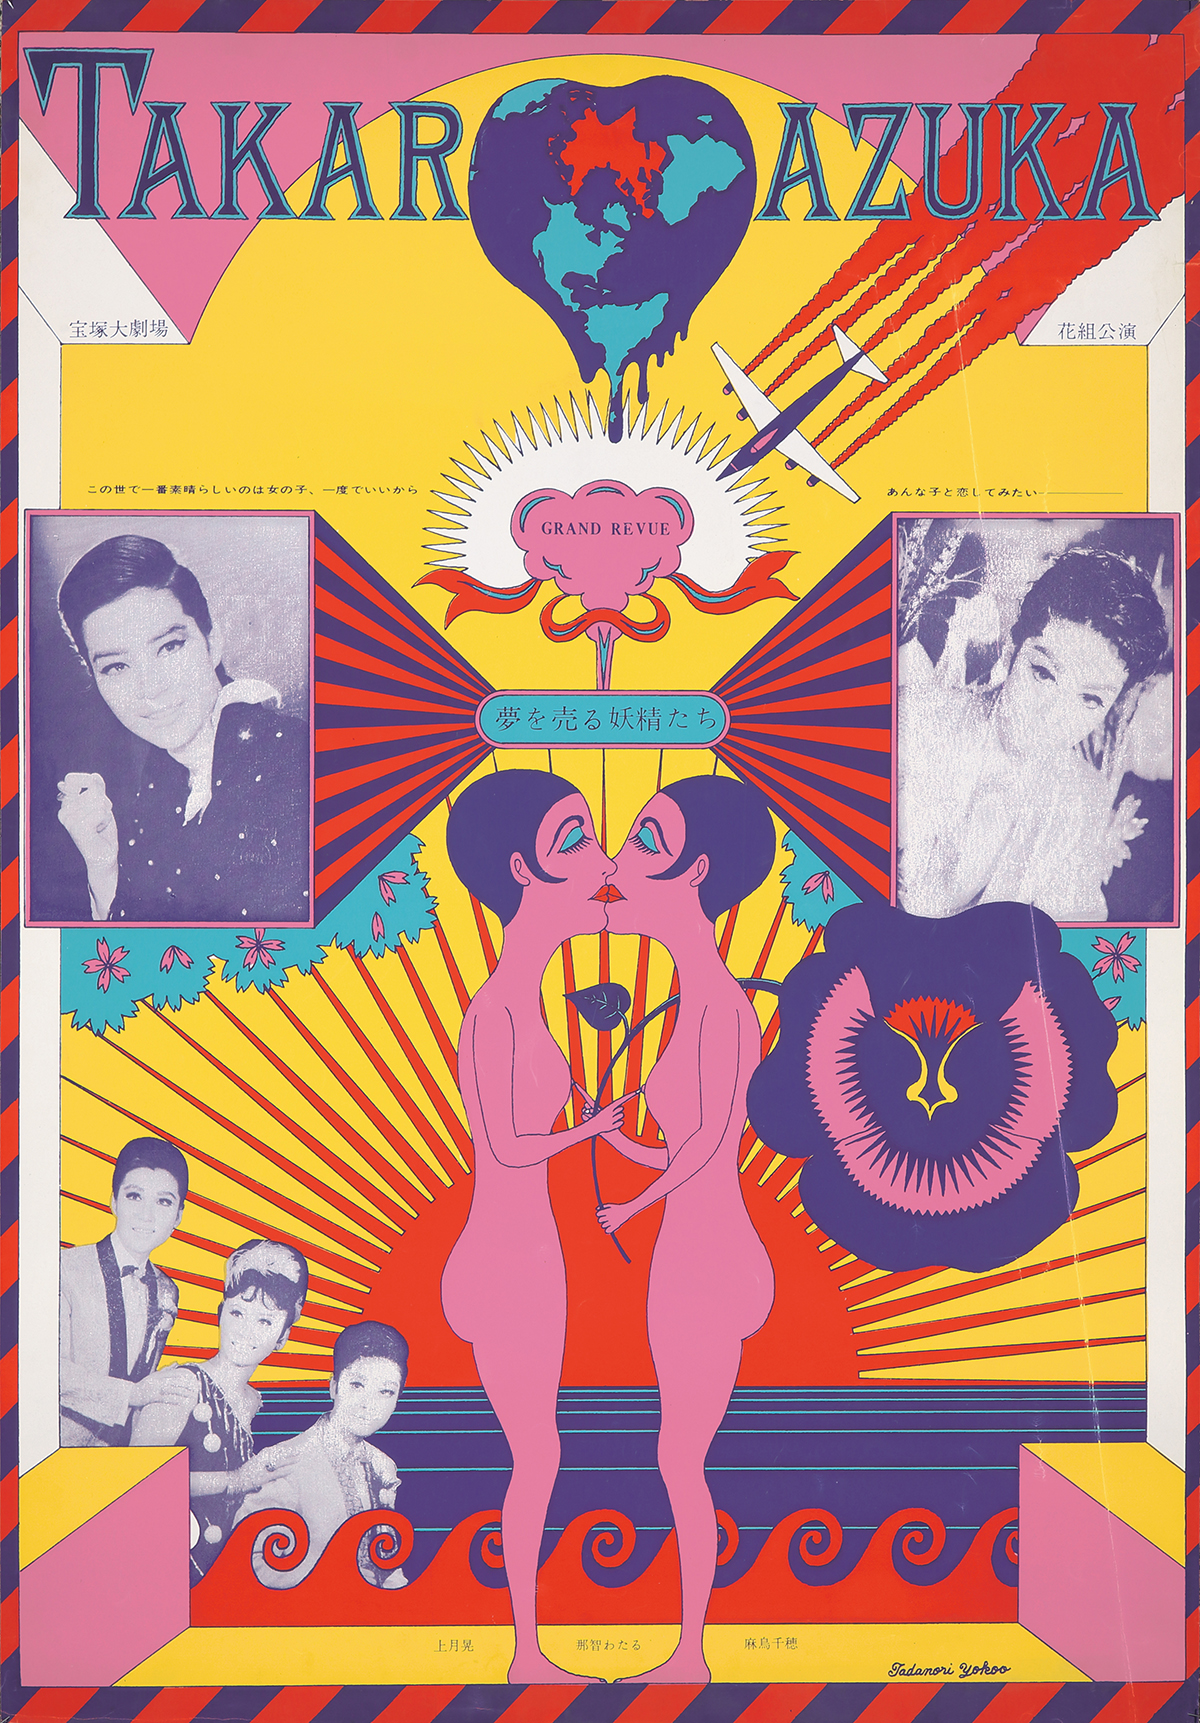 Takarazuka / Grand Revue. 1966. | Poster Auctions International, Inc.